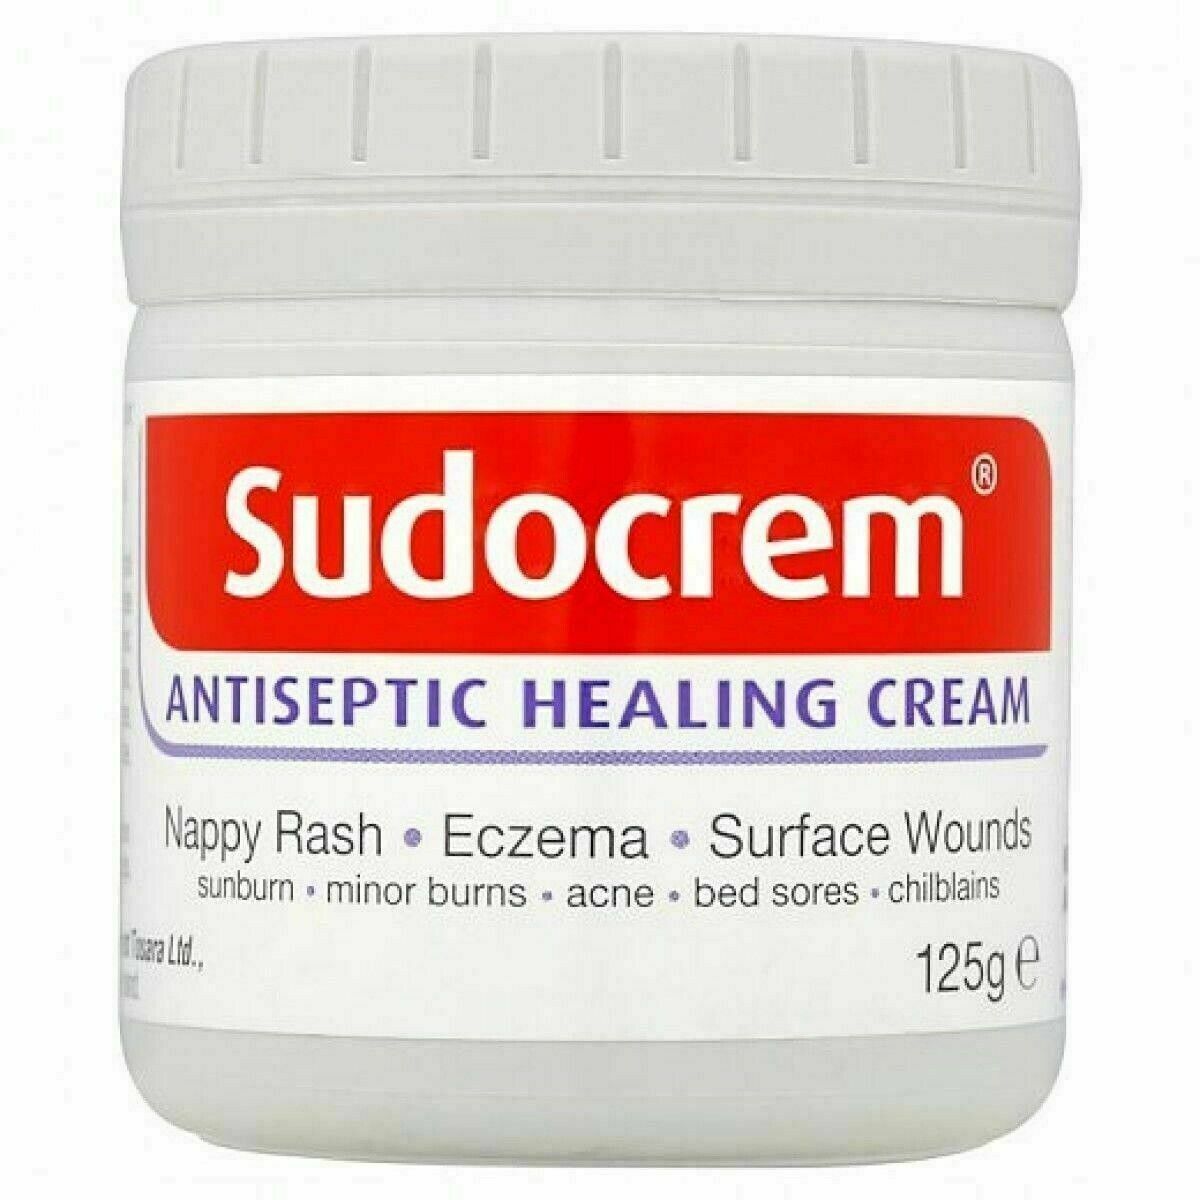 Sudocrem Antiseptic Healing Cream 125g -  Exp 7/22, Free Shipping & Usa Seller